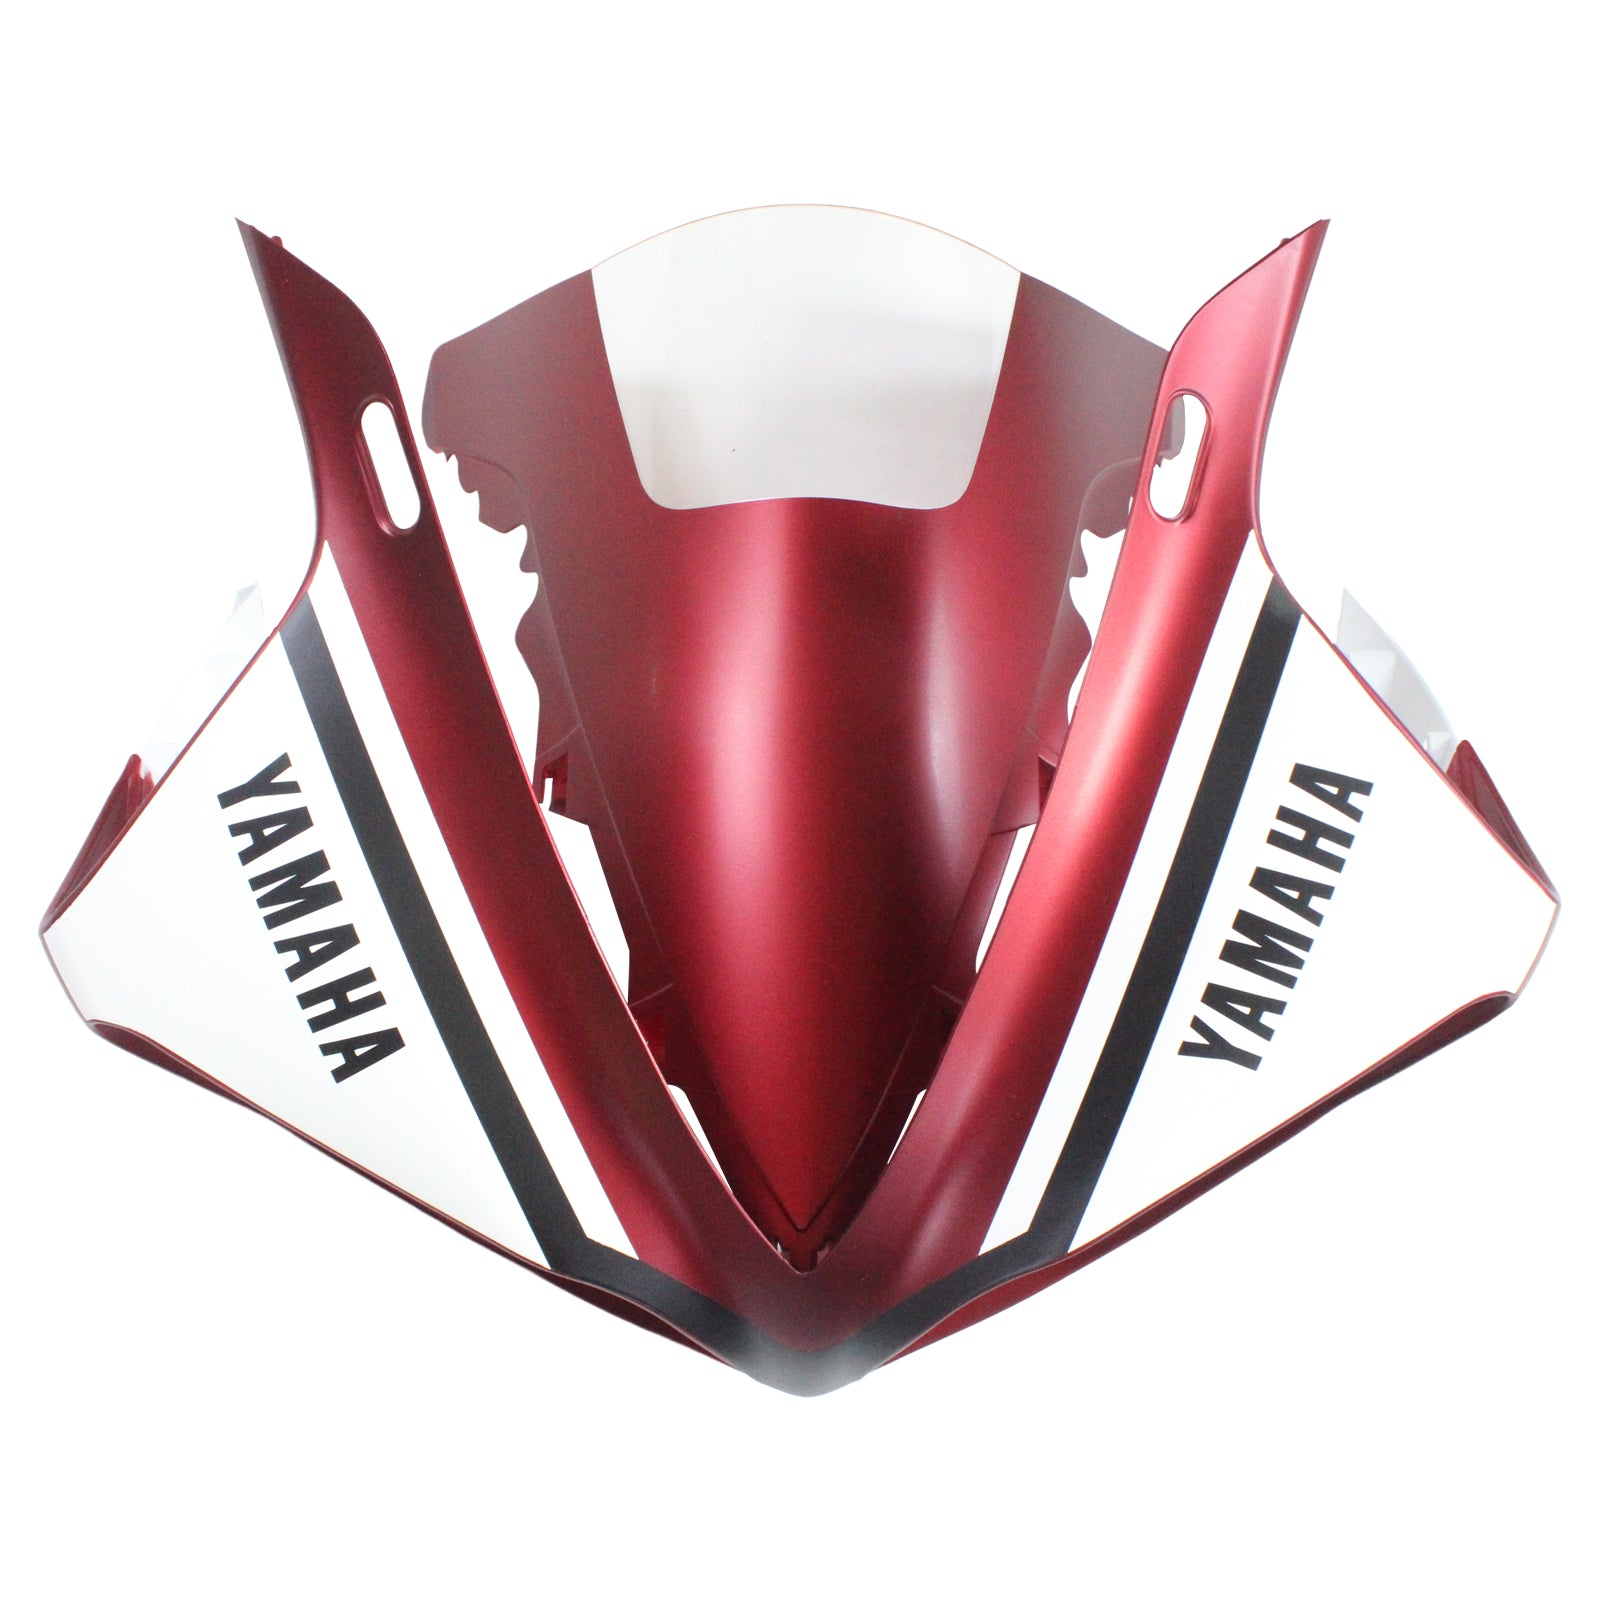 Amotopart Yamaha 2009-2011 YZF 1000 R1 Fairing Kit